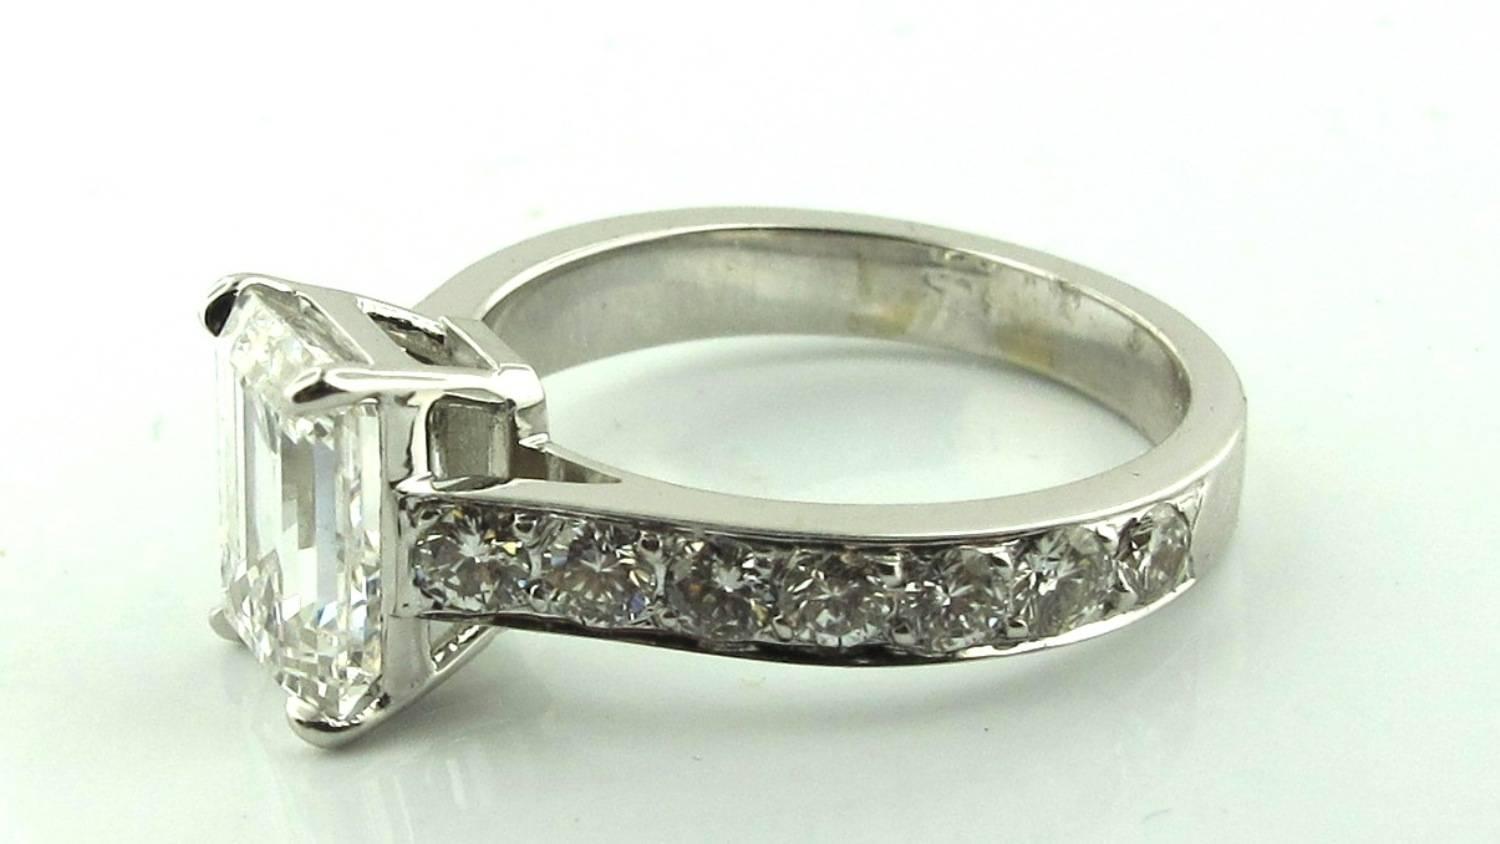 Women's or Men's GIA Certified 3.01 Carat Emerald Cut Diamond Ring, E color, in Platinum